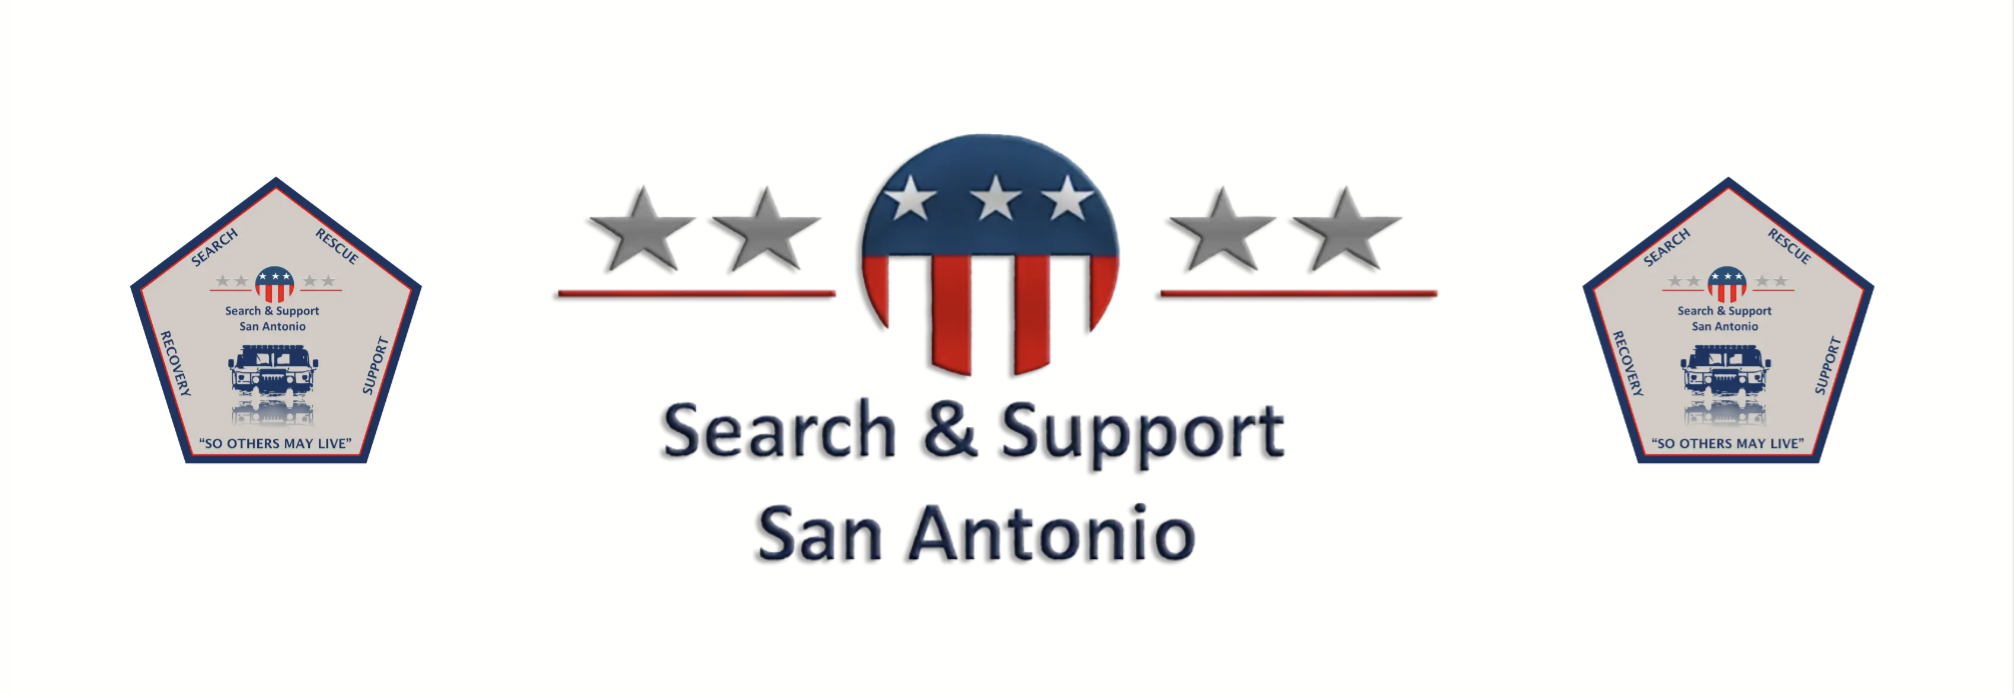 Search & Support San Antonio Gear